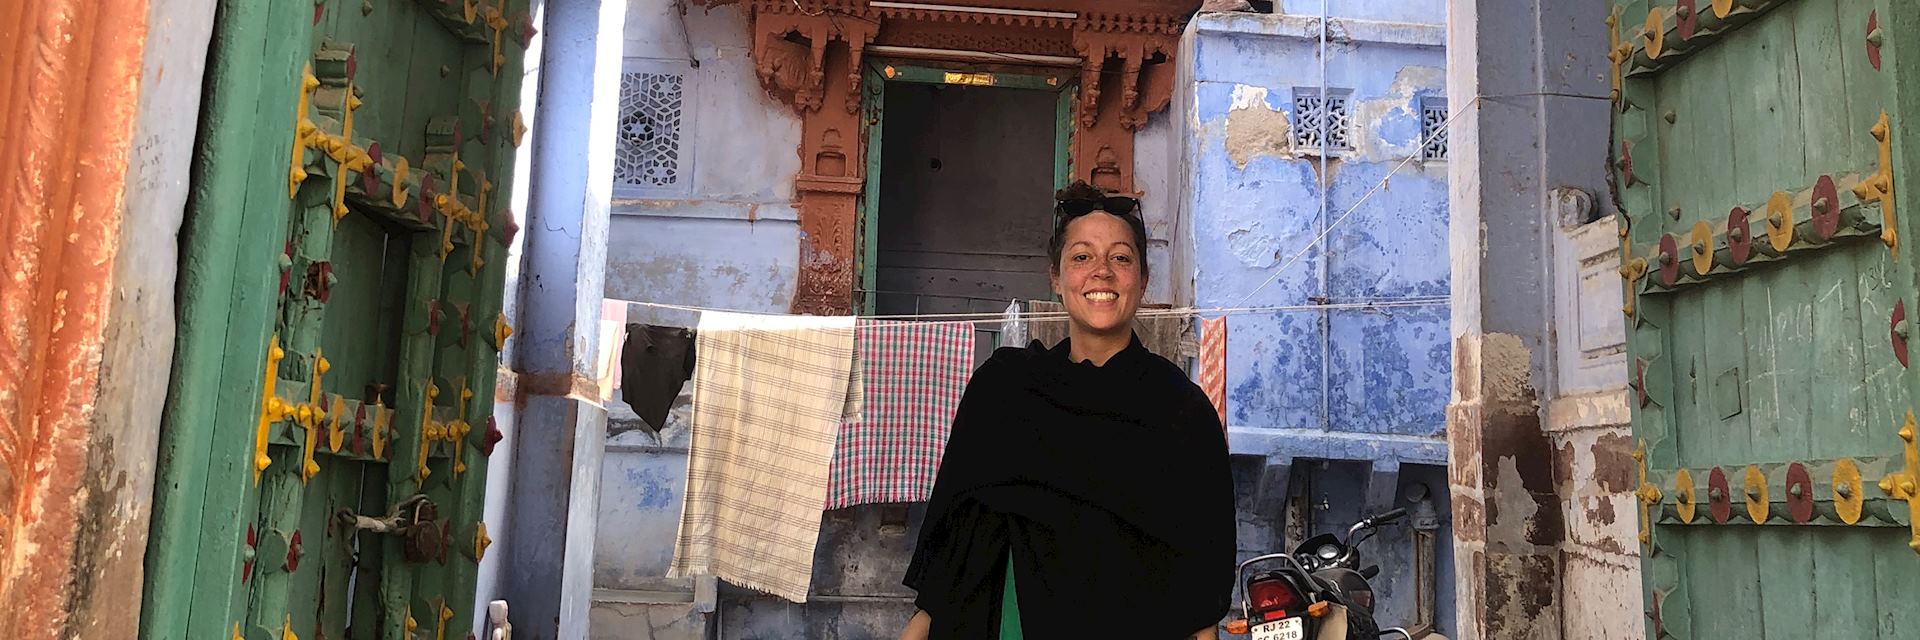 Mikala in Jodhpur, India